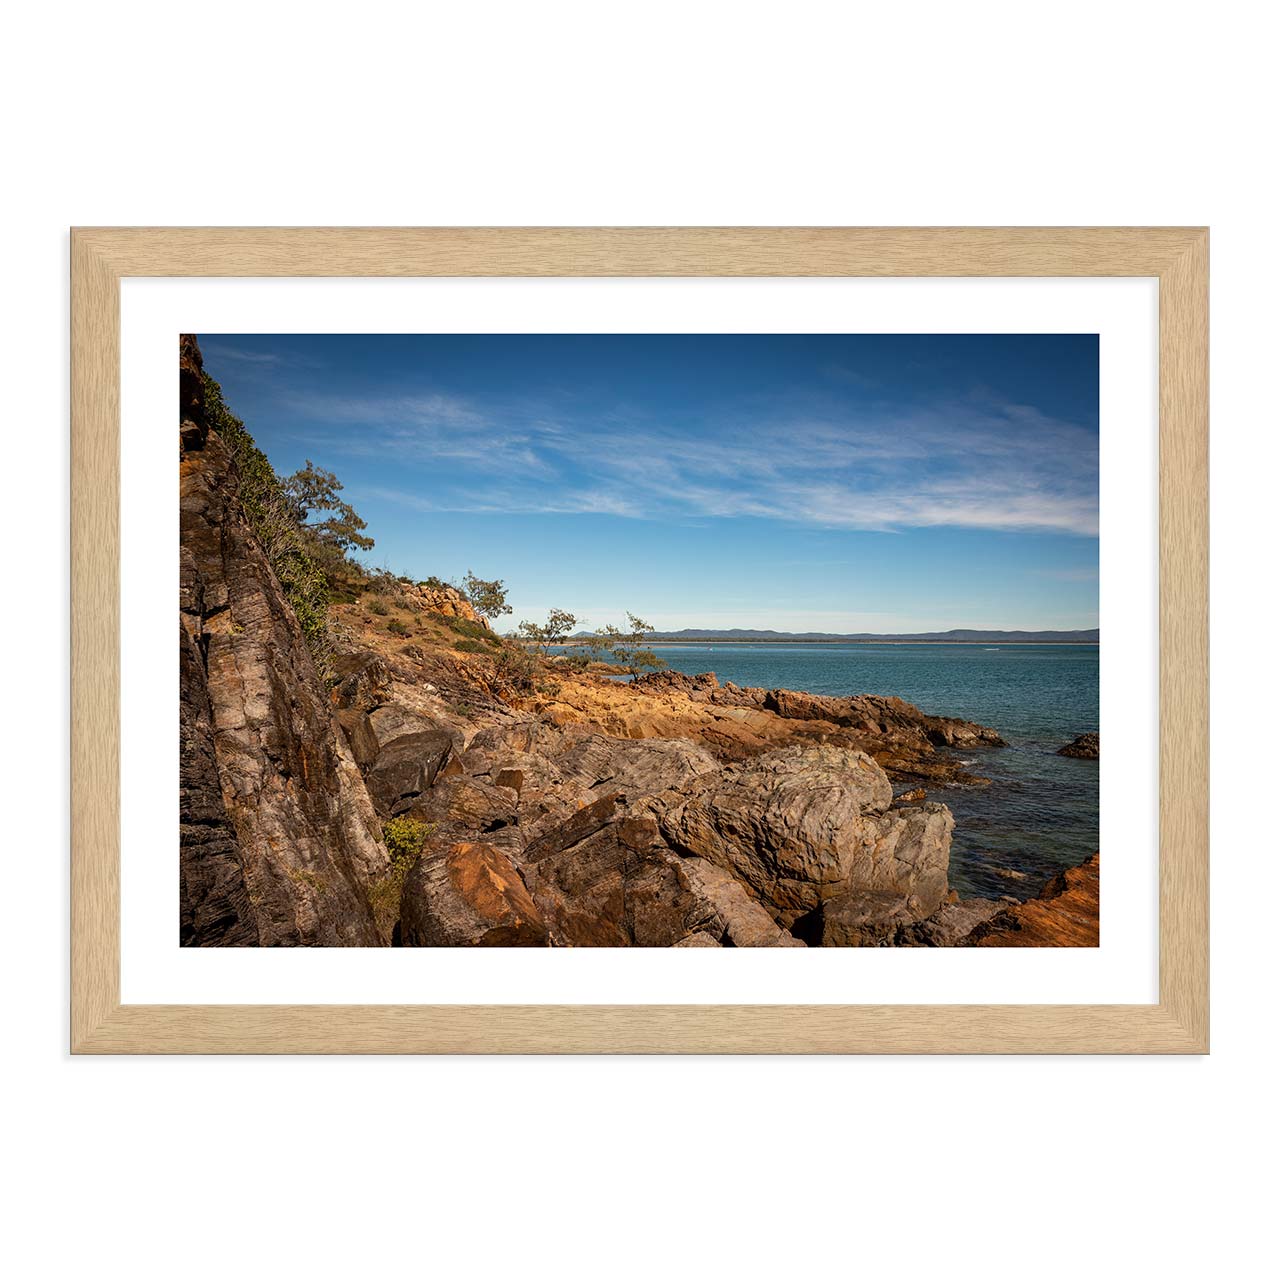 Coastal Cliffs of Seventeen Seventy: Rugged Landscape Framed Print